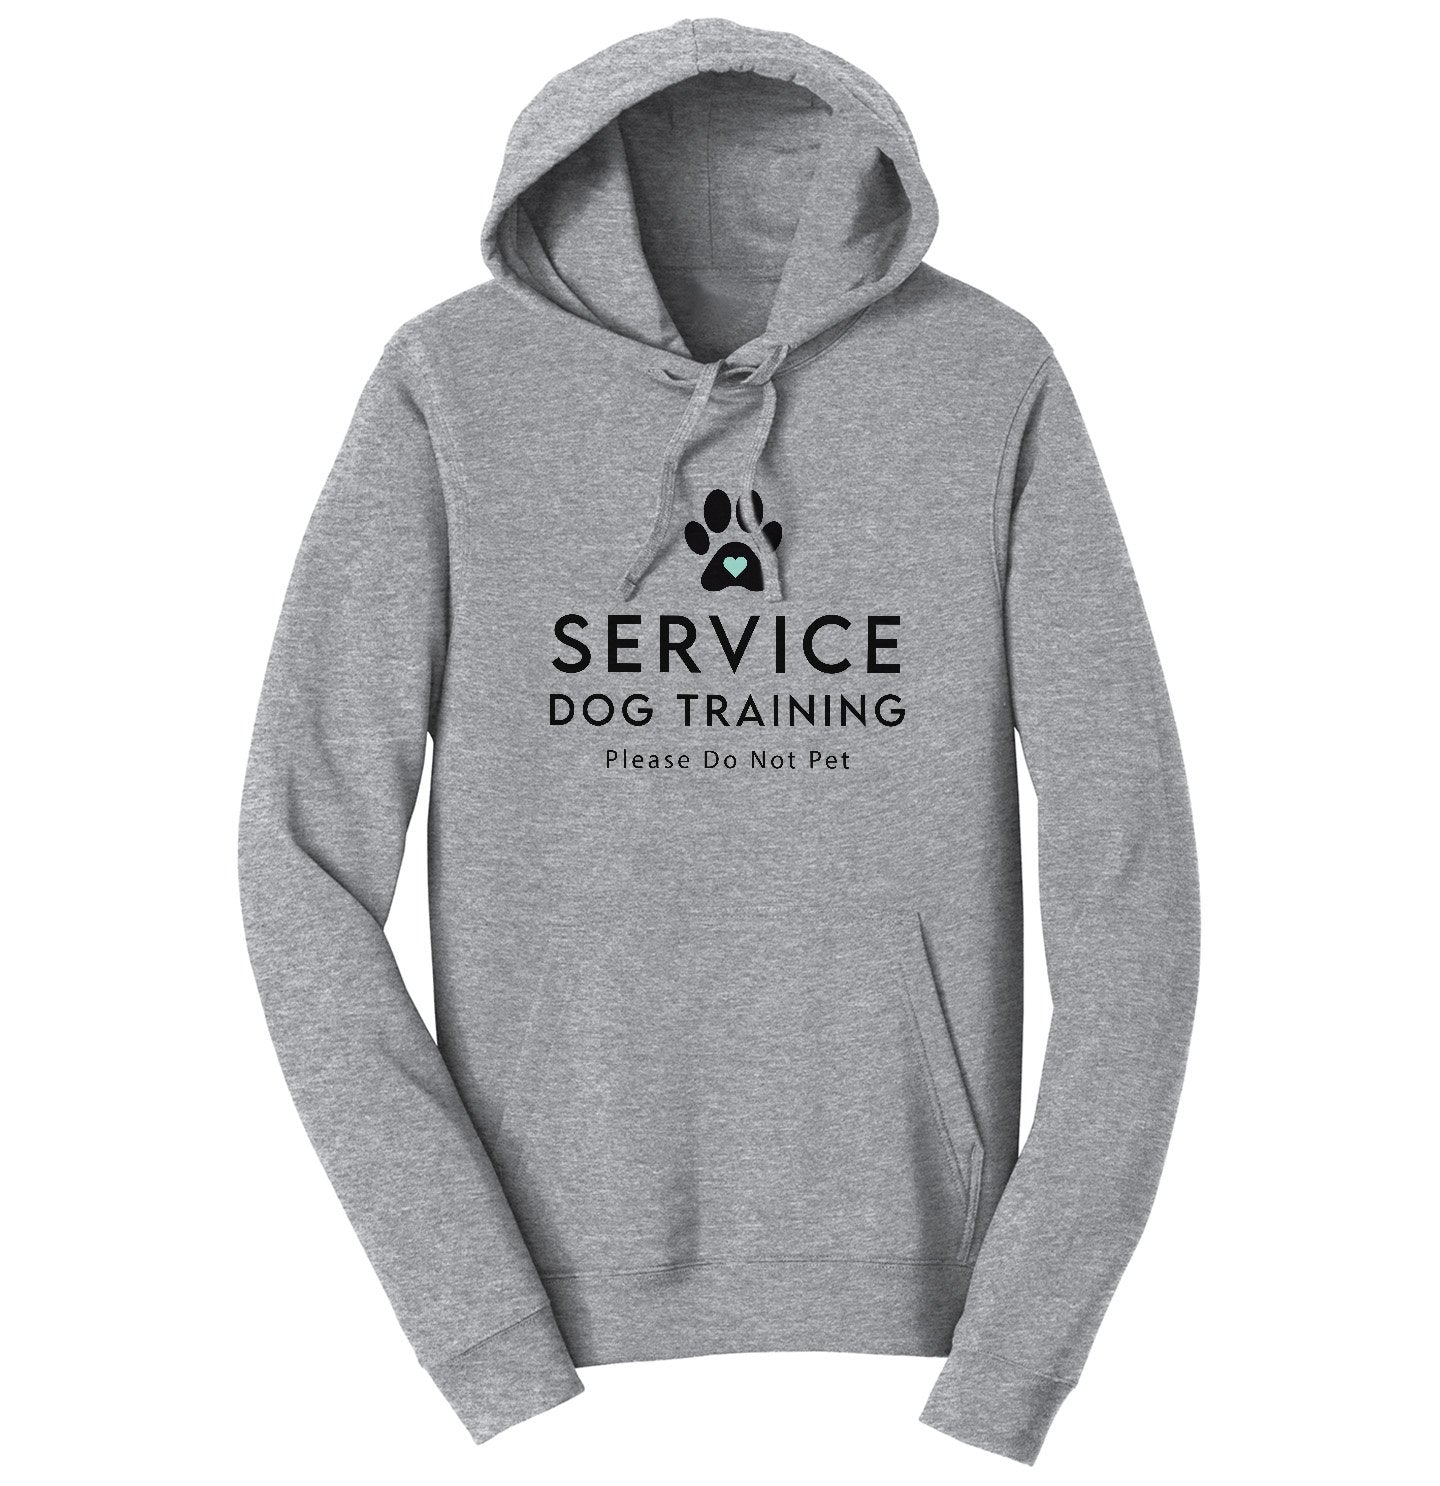 Service Dog Training - Adult Unisex Hoodie Sweatshirt